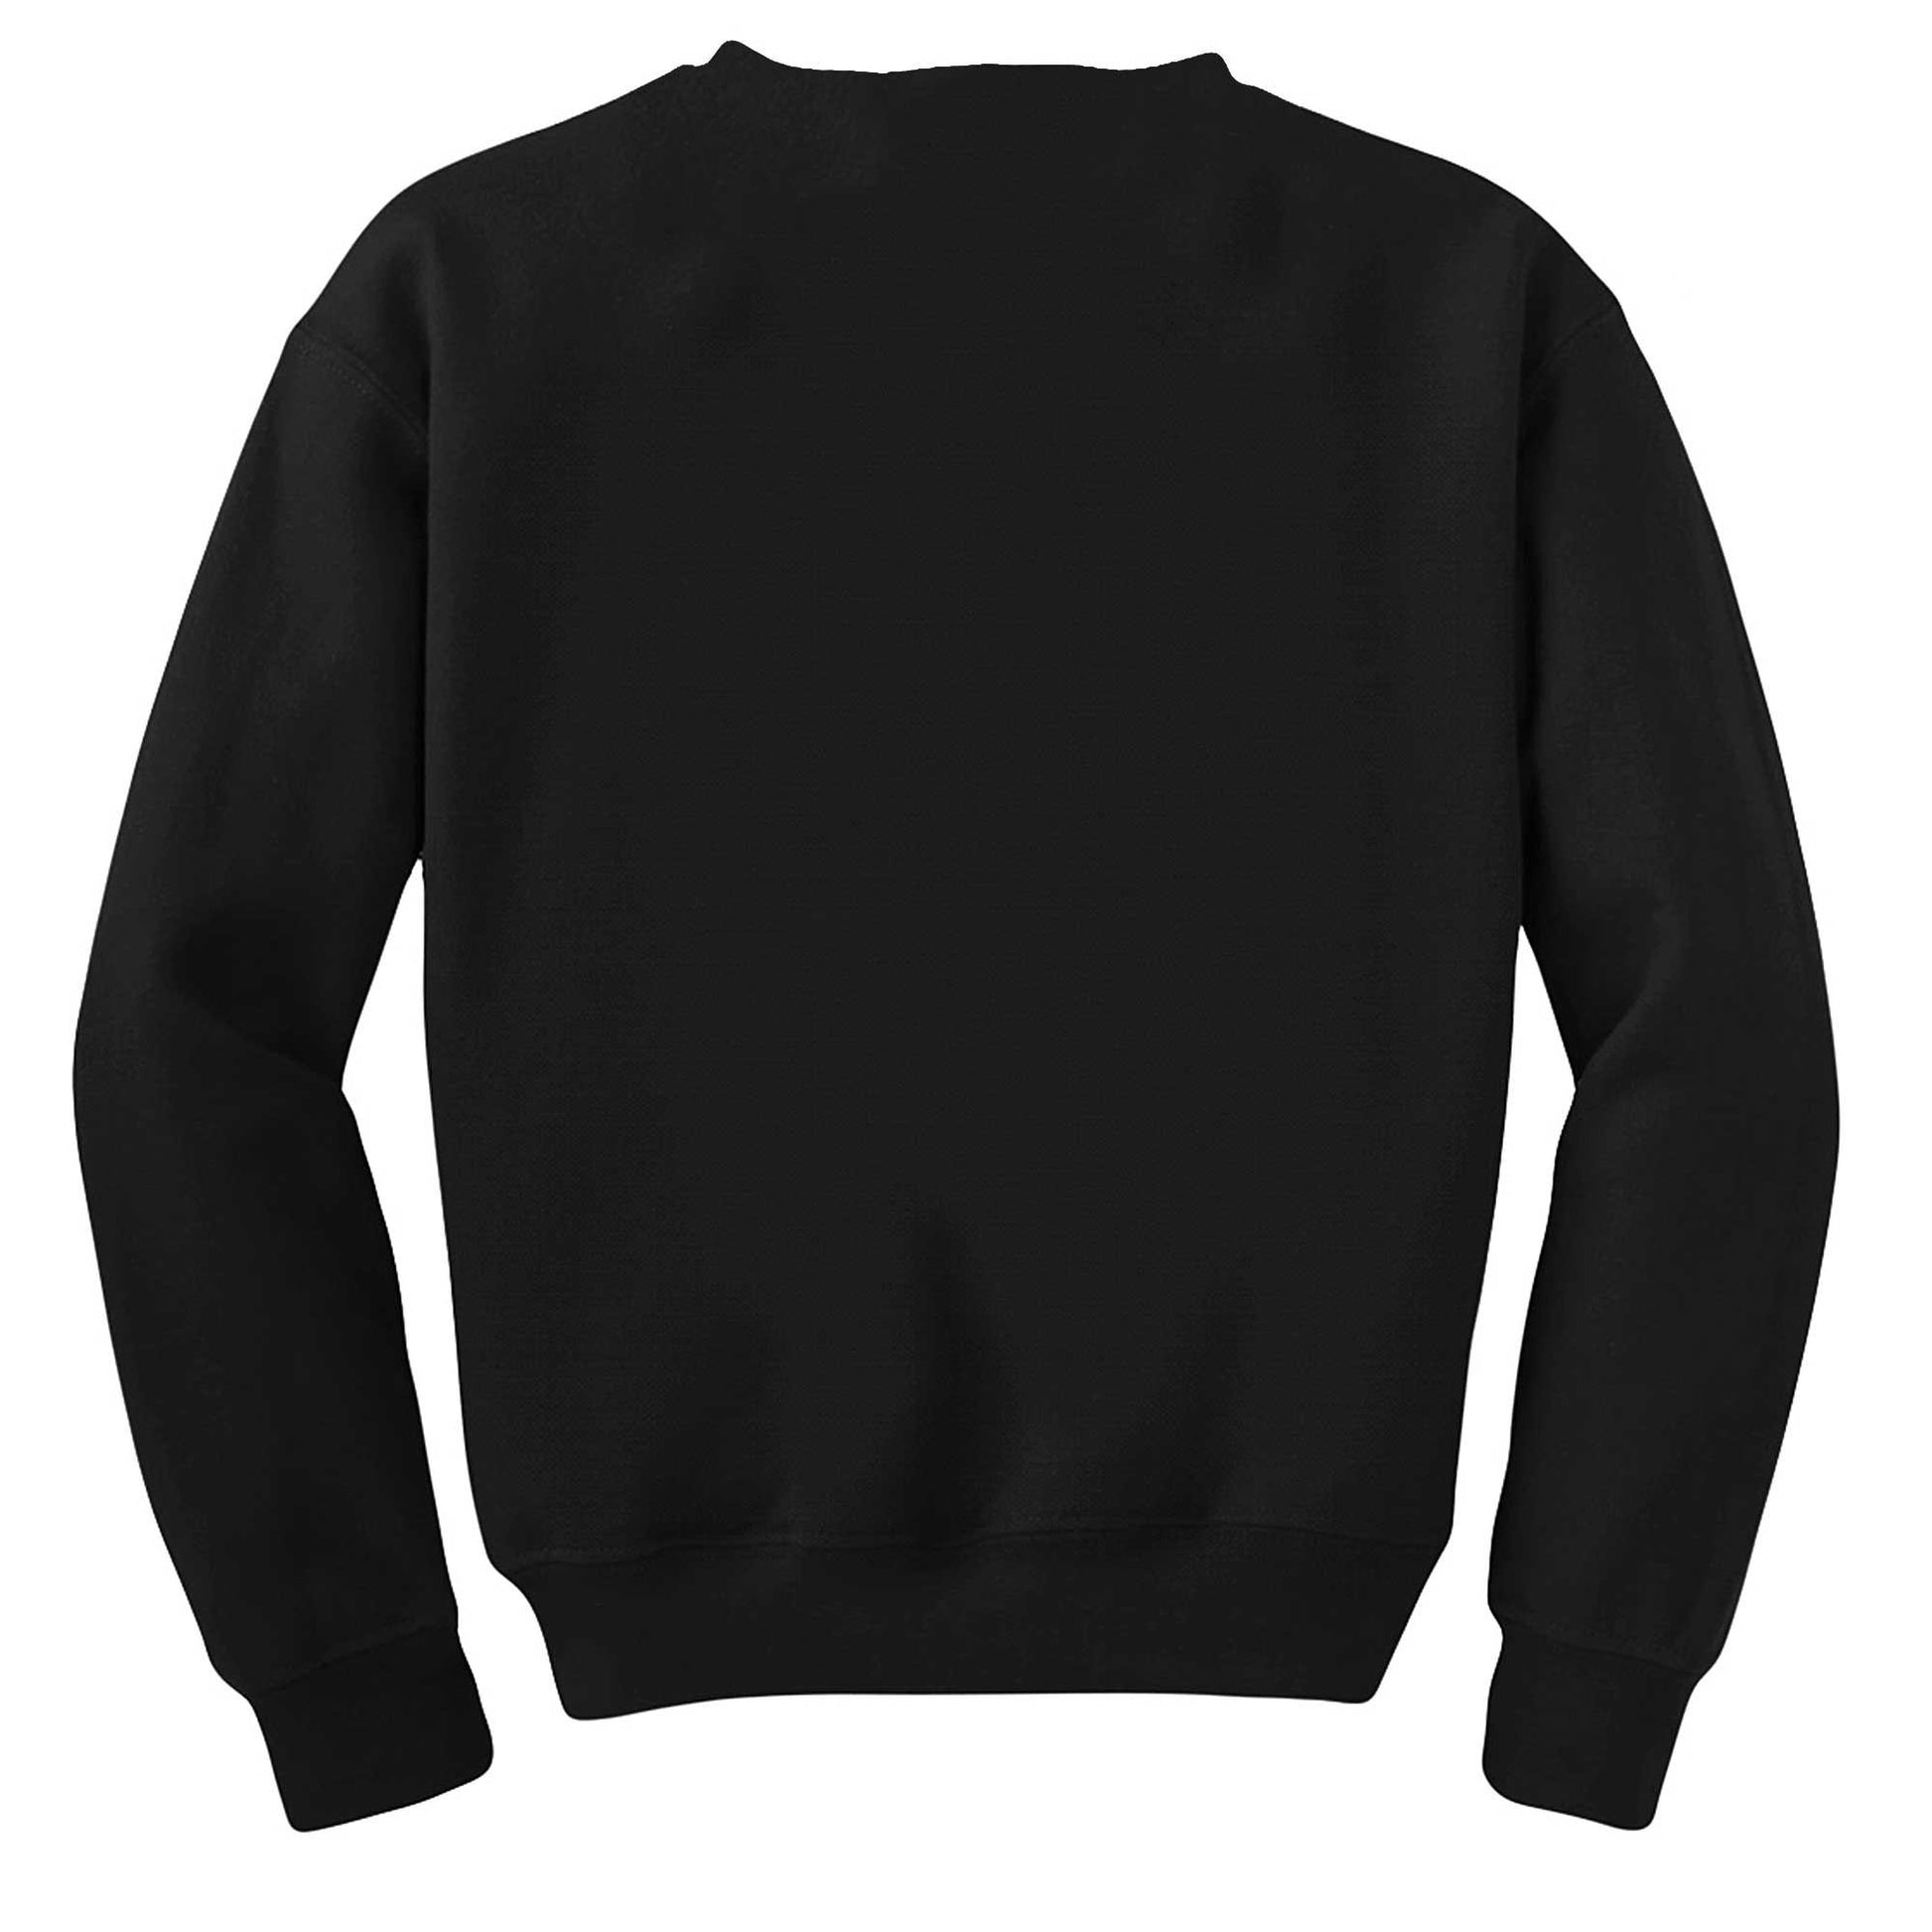 John Wick Graphic Design Siyah Sweatshirt - Zepplingiyim